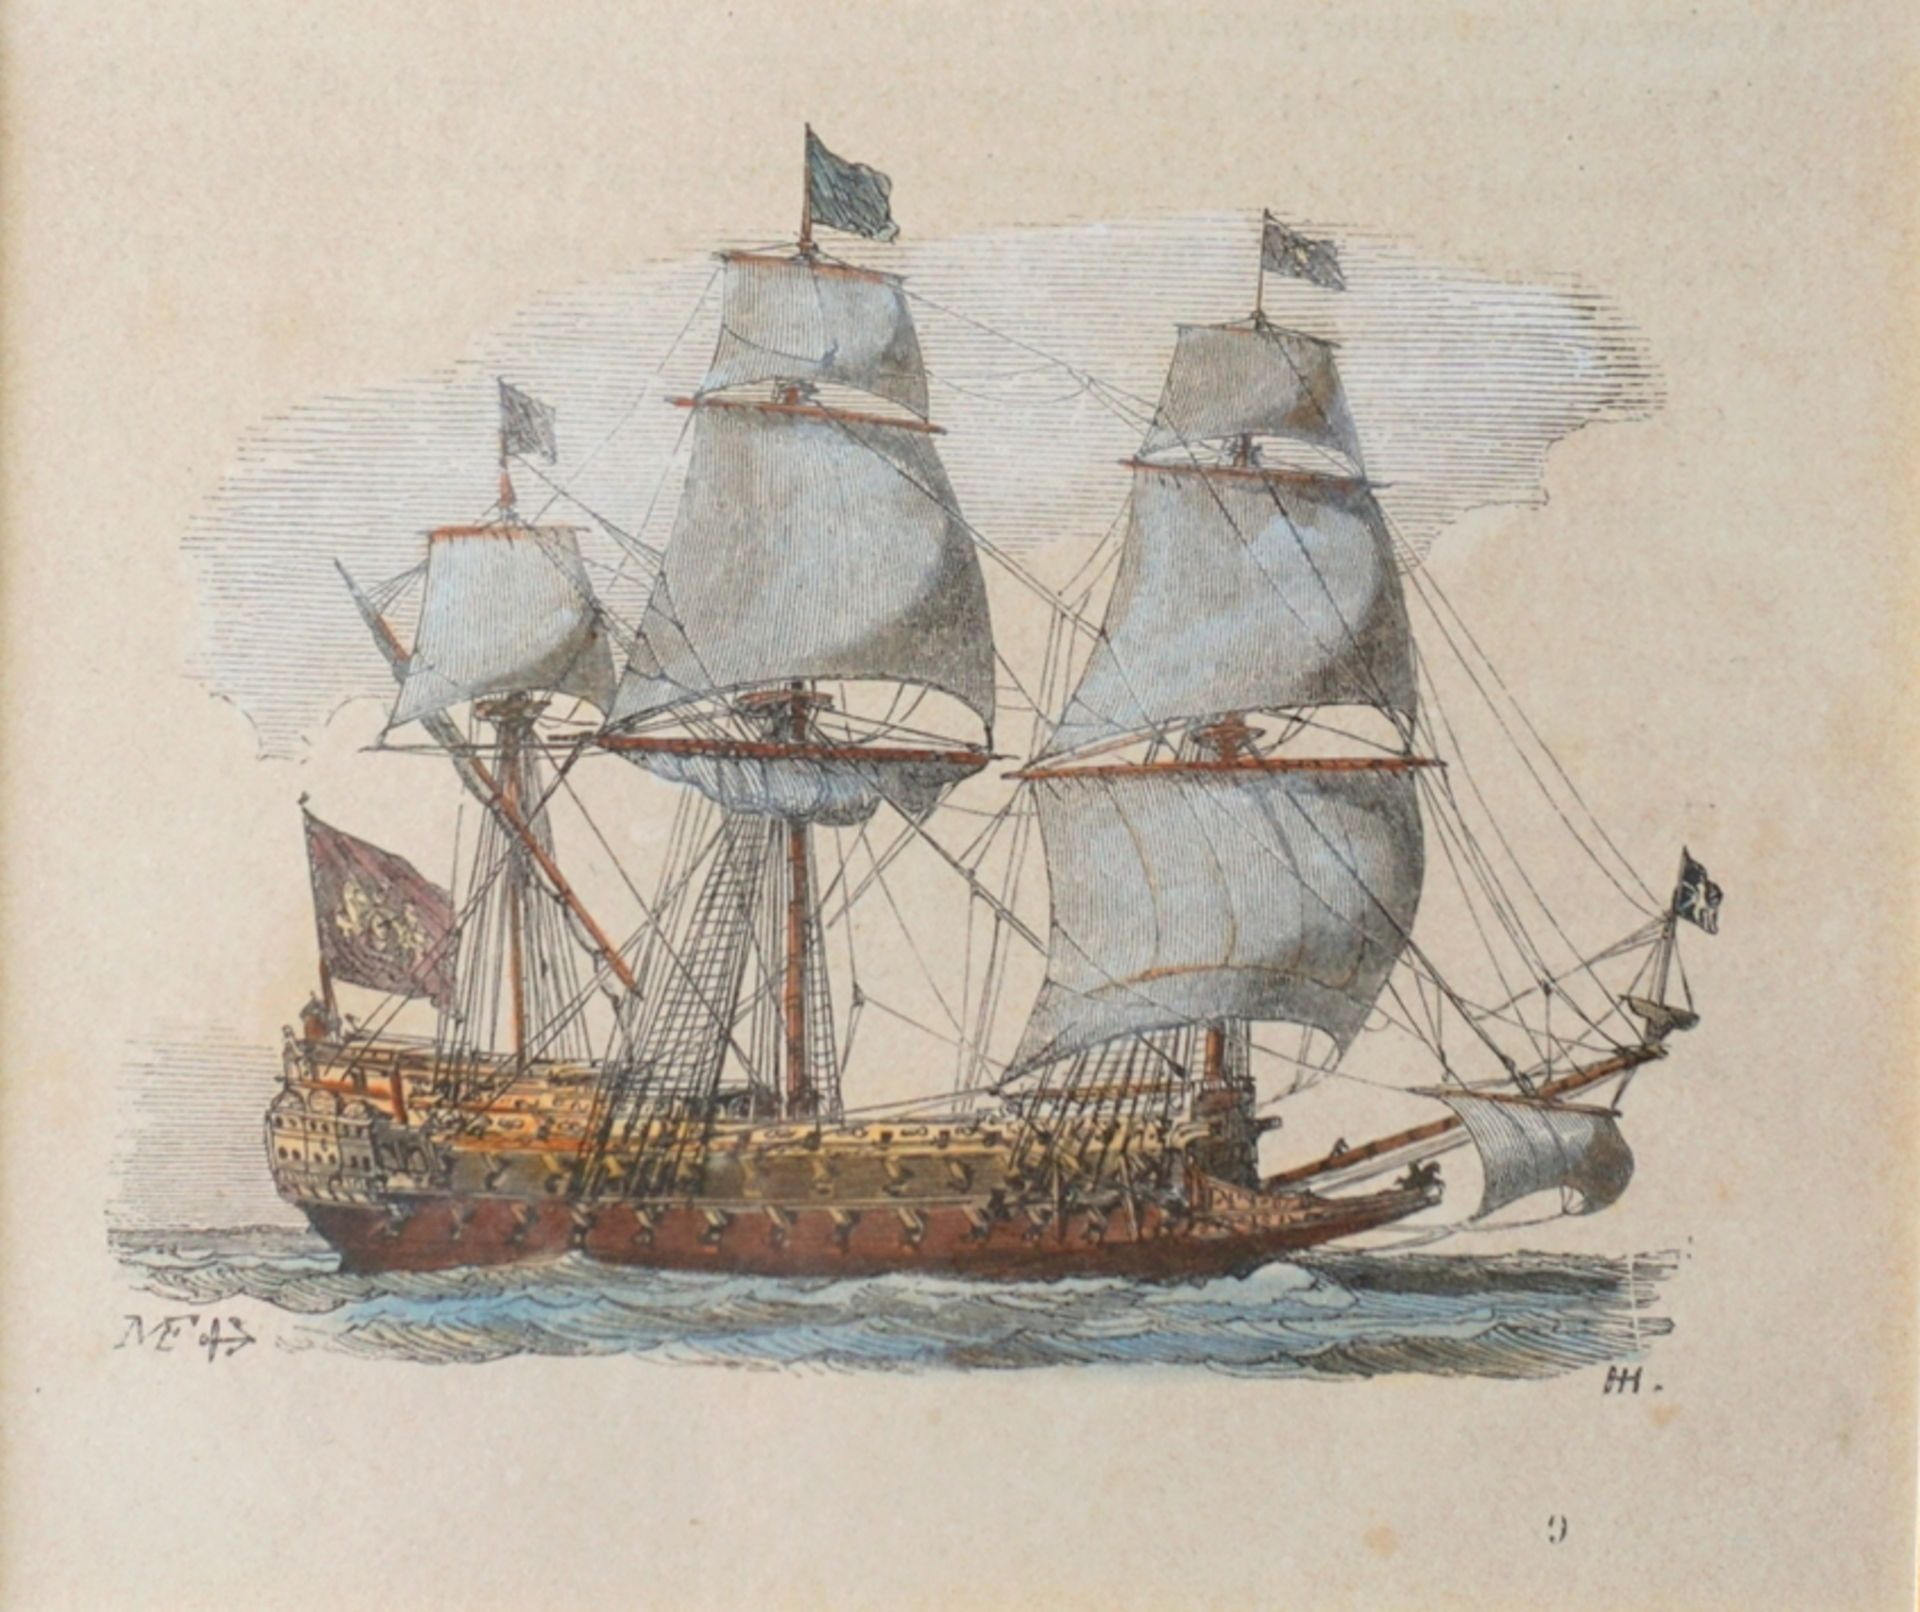 Monogrammist MF, "Segelboote", kolorierte Kupferstiche, 19. Jh. - Image 2 of 4